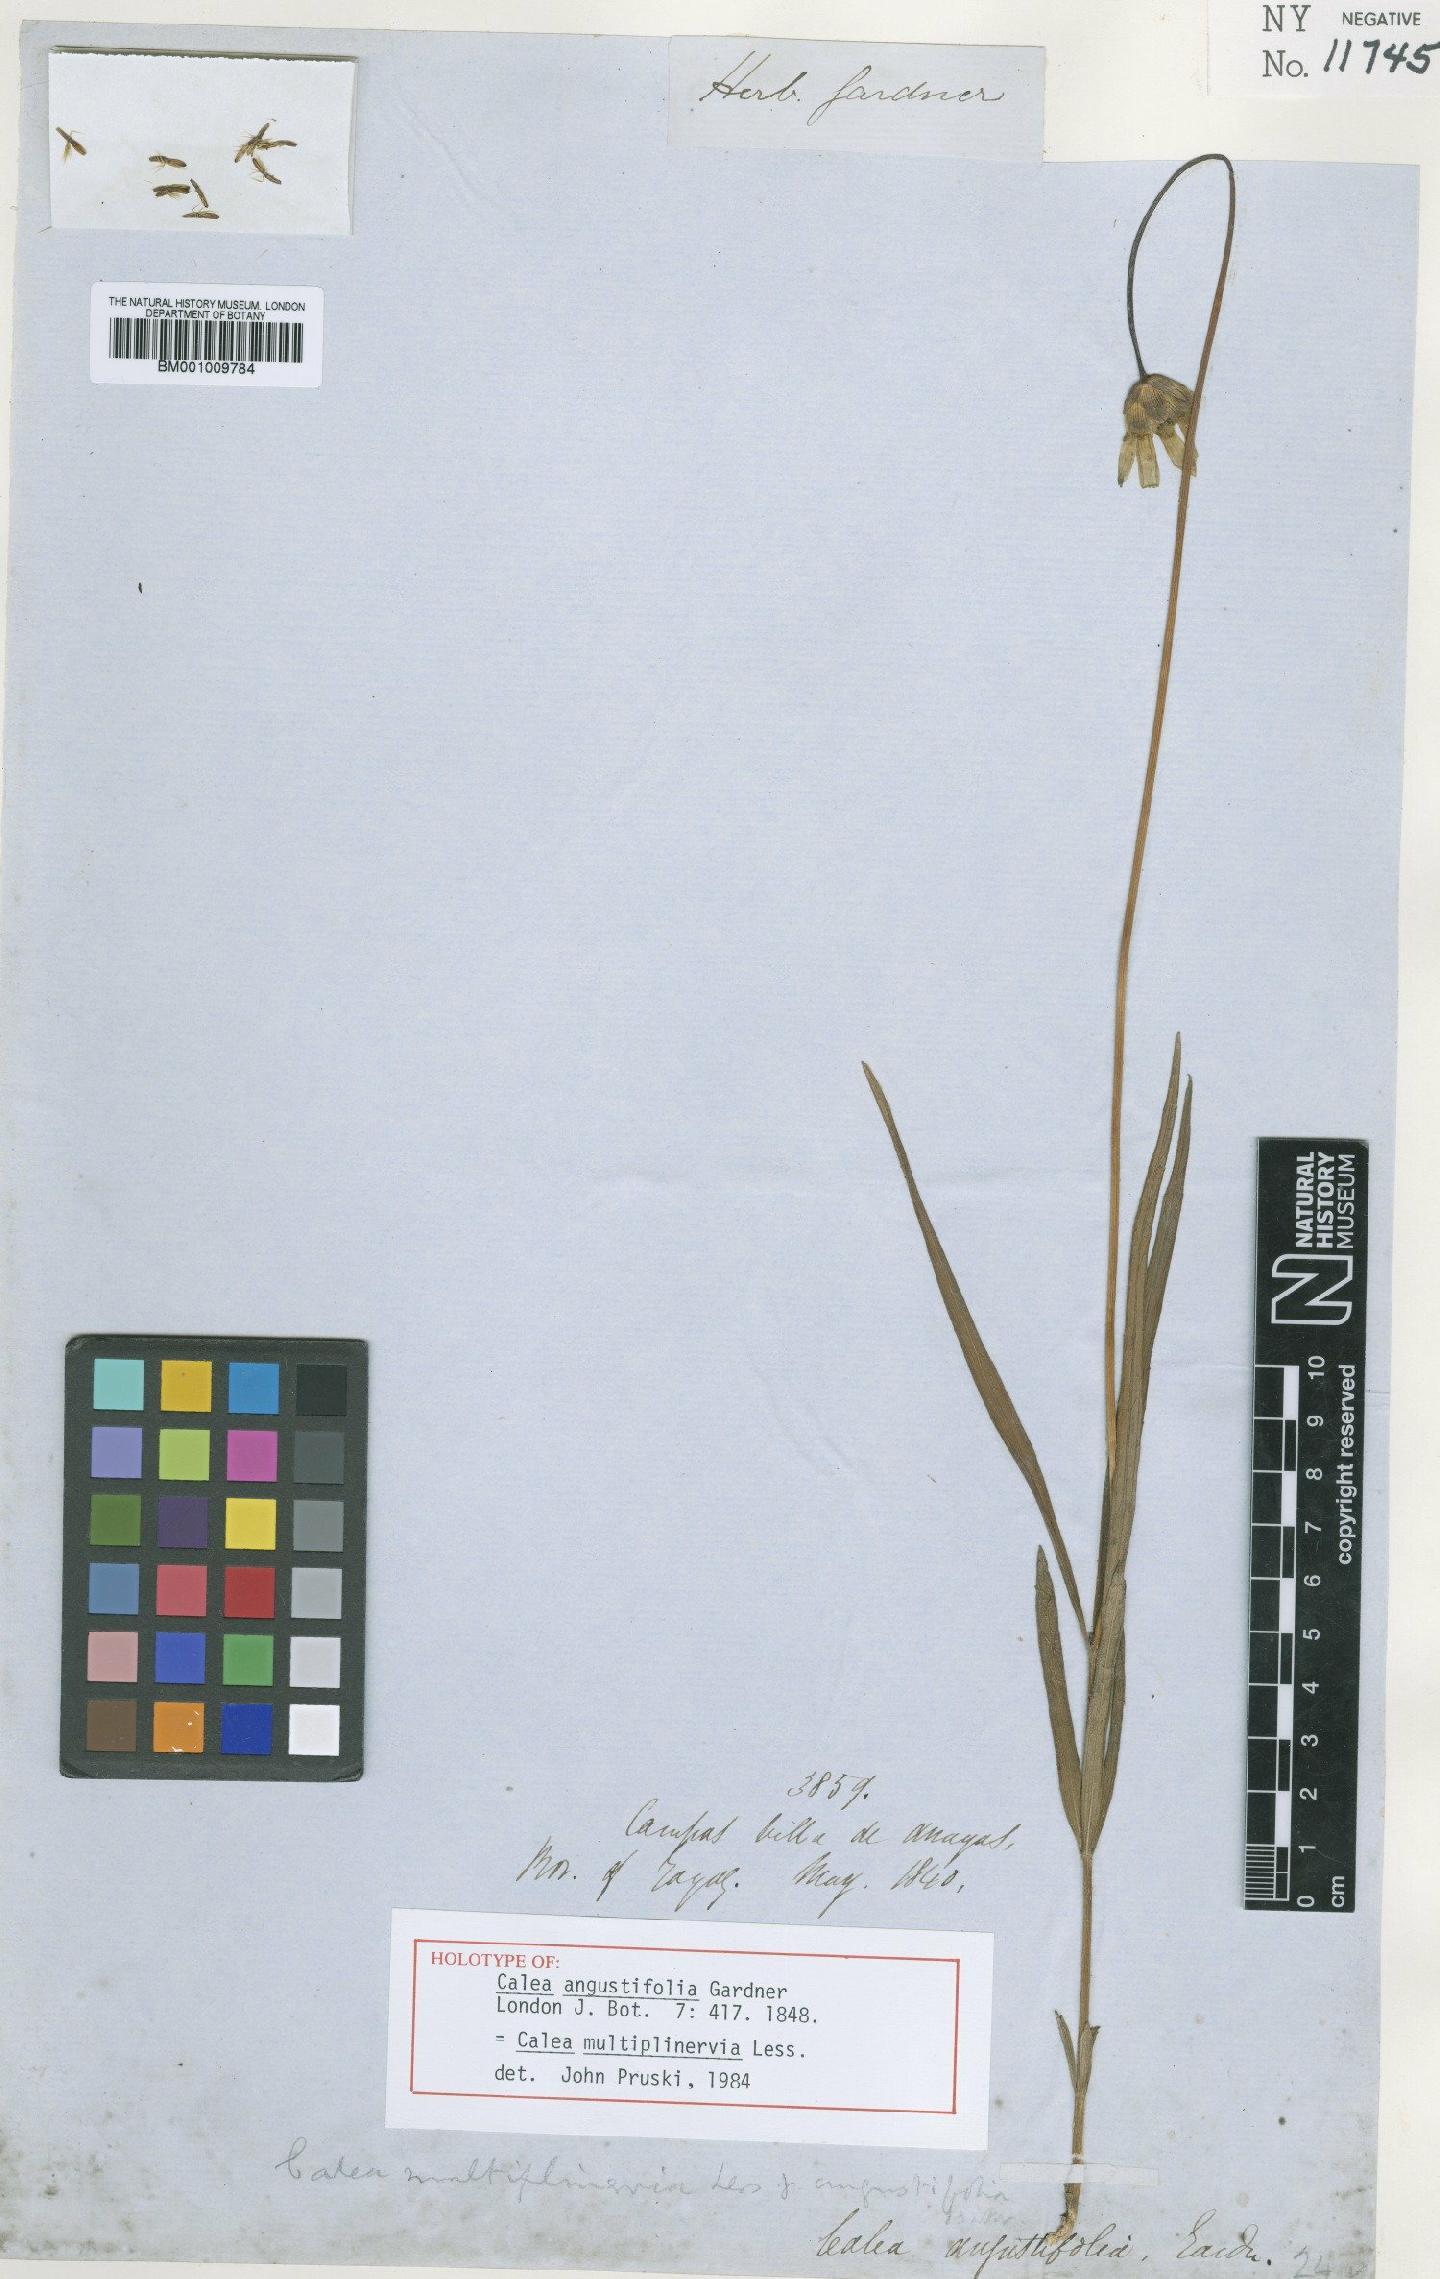 To NHMUK collection (Calea multiplinervia Less.; Holotype; NHMUK:ecatalogue:621868)